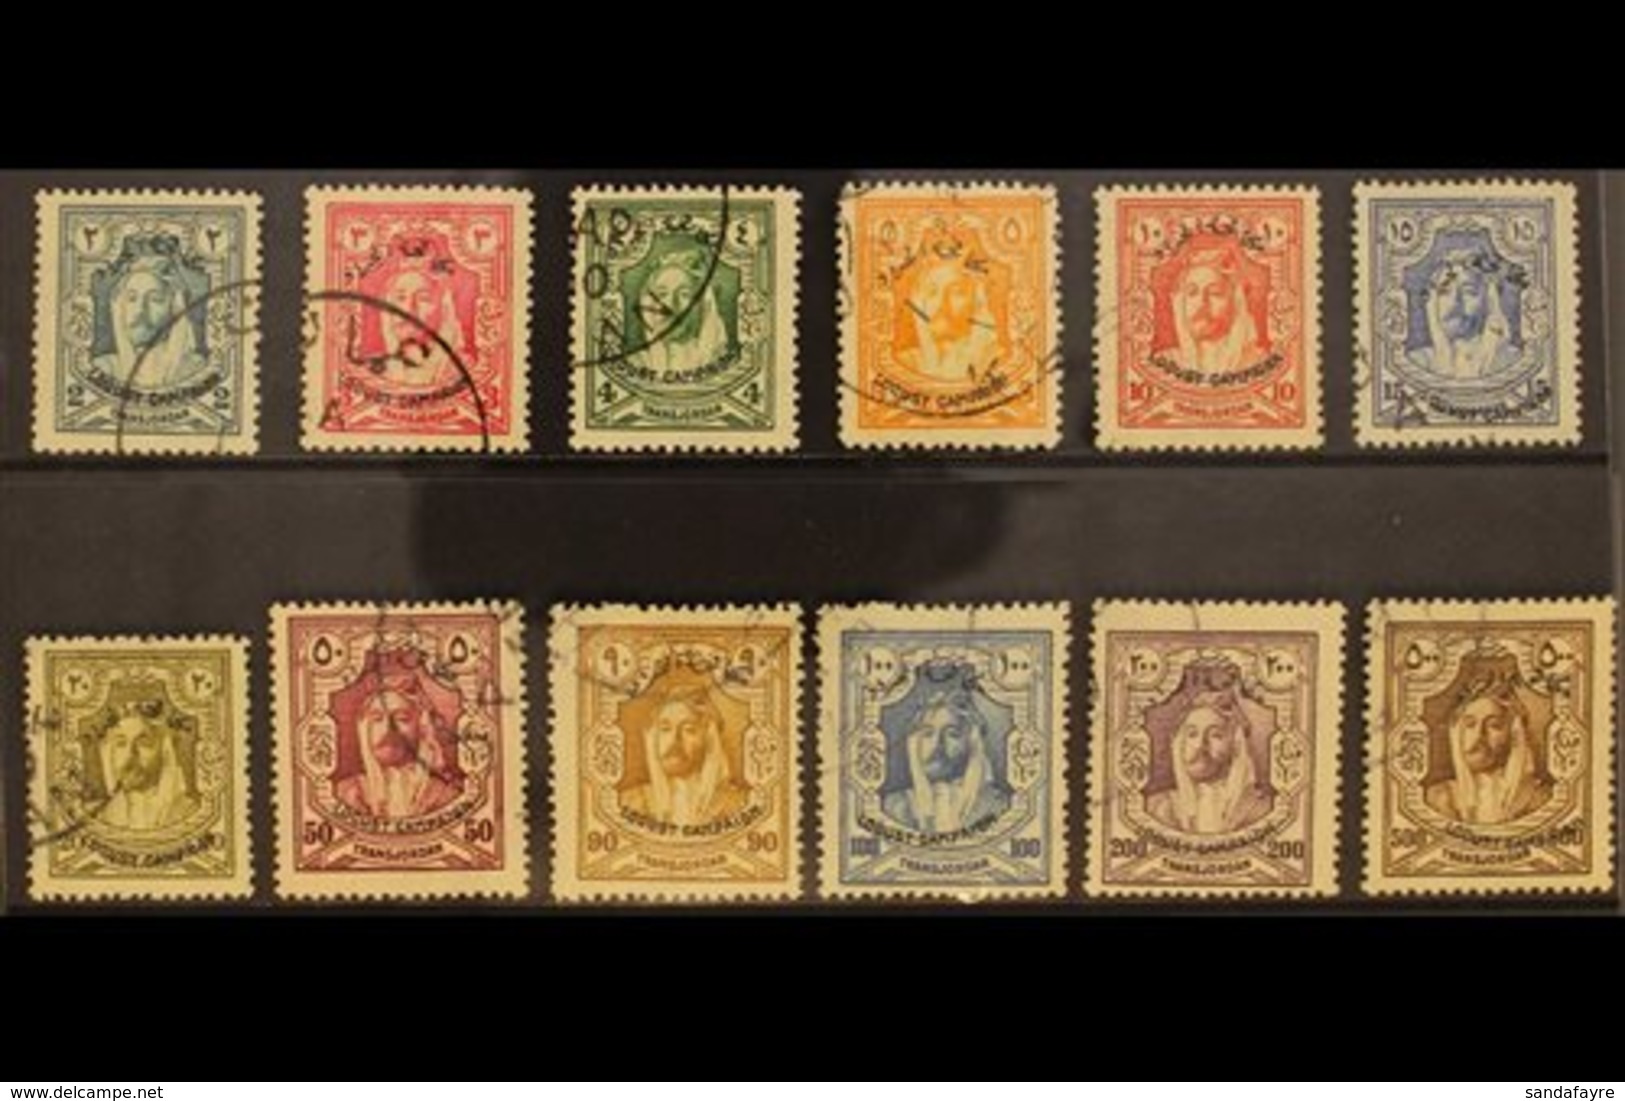 1930 LOCUST CAMPAIGN Emir "Locust Campaign" Overprinted Set, SG 183/94, Fine Used (12 Stamps) For More Images, Please Vi - Jordanie